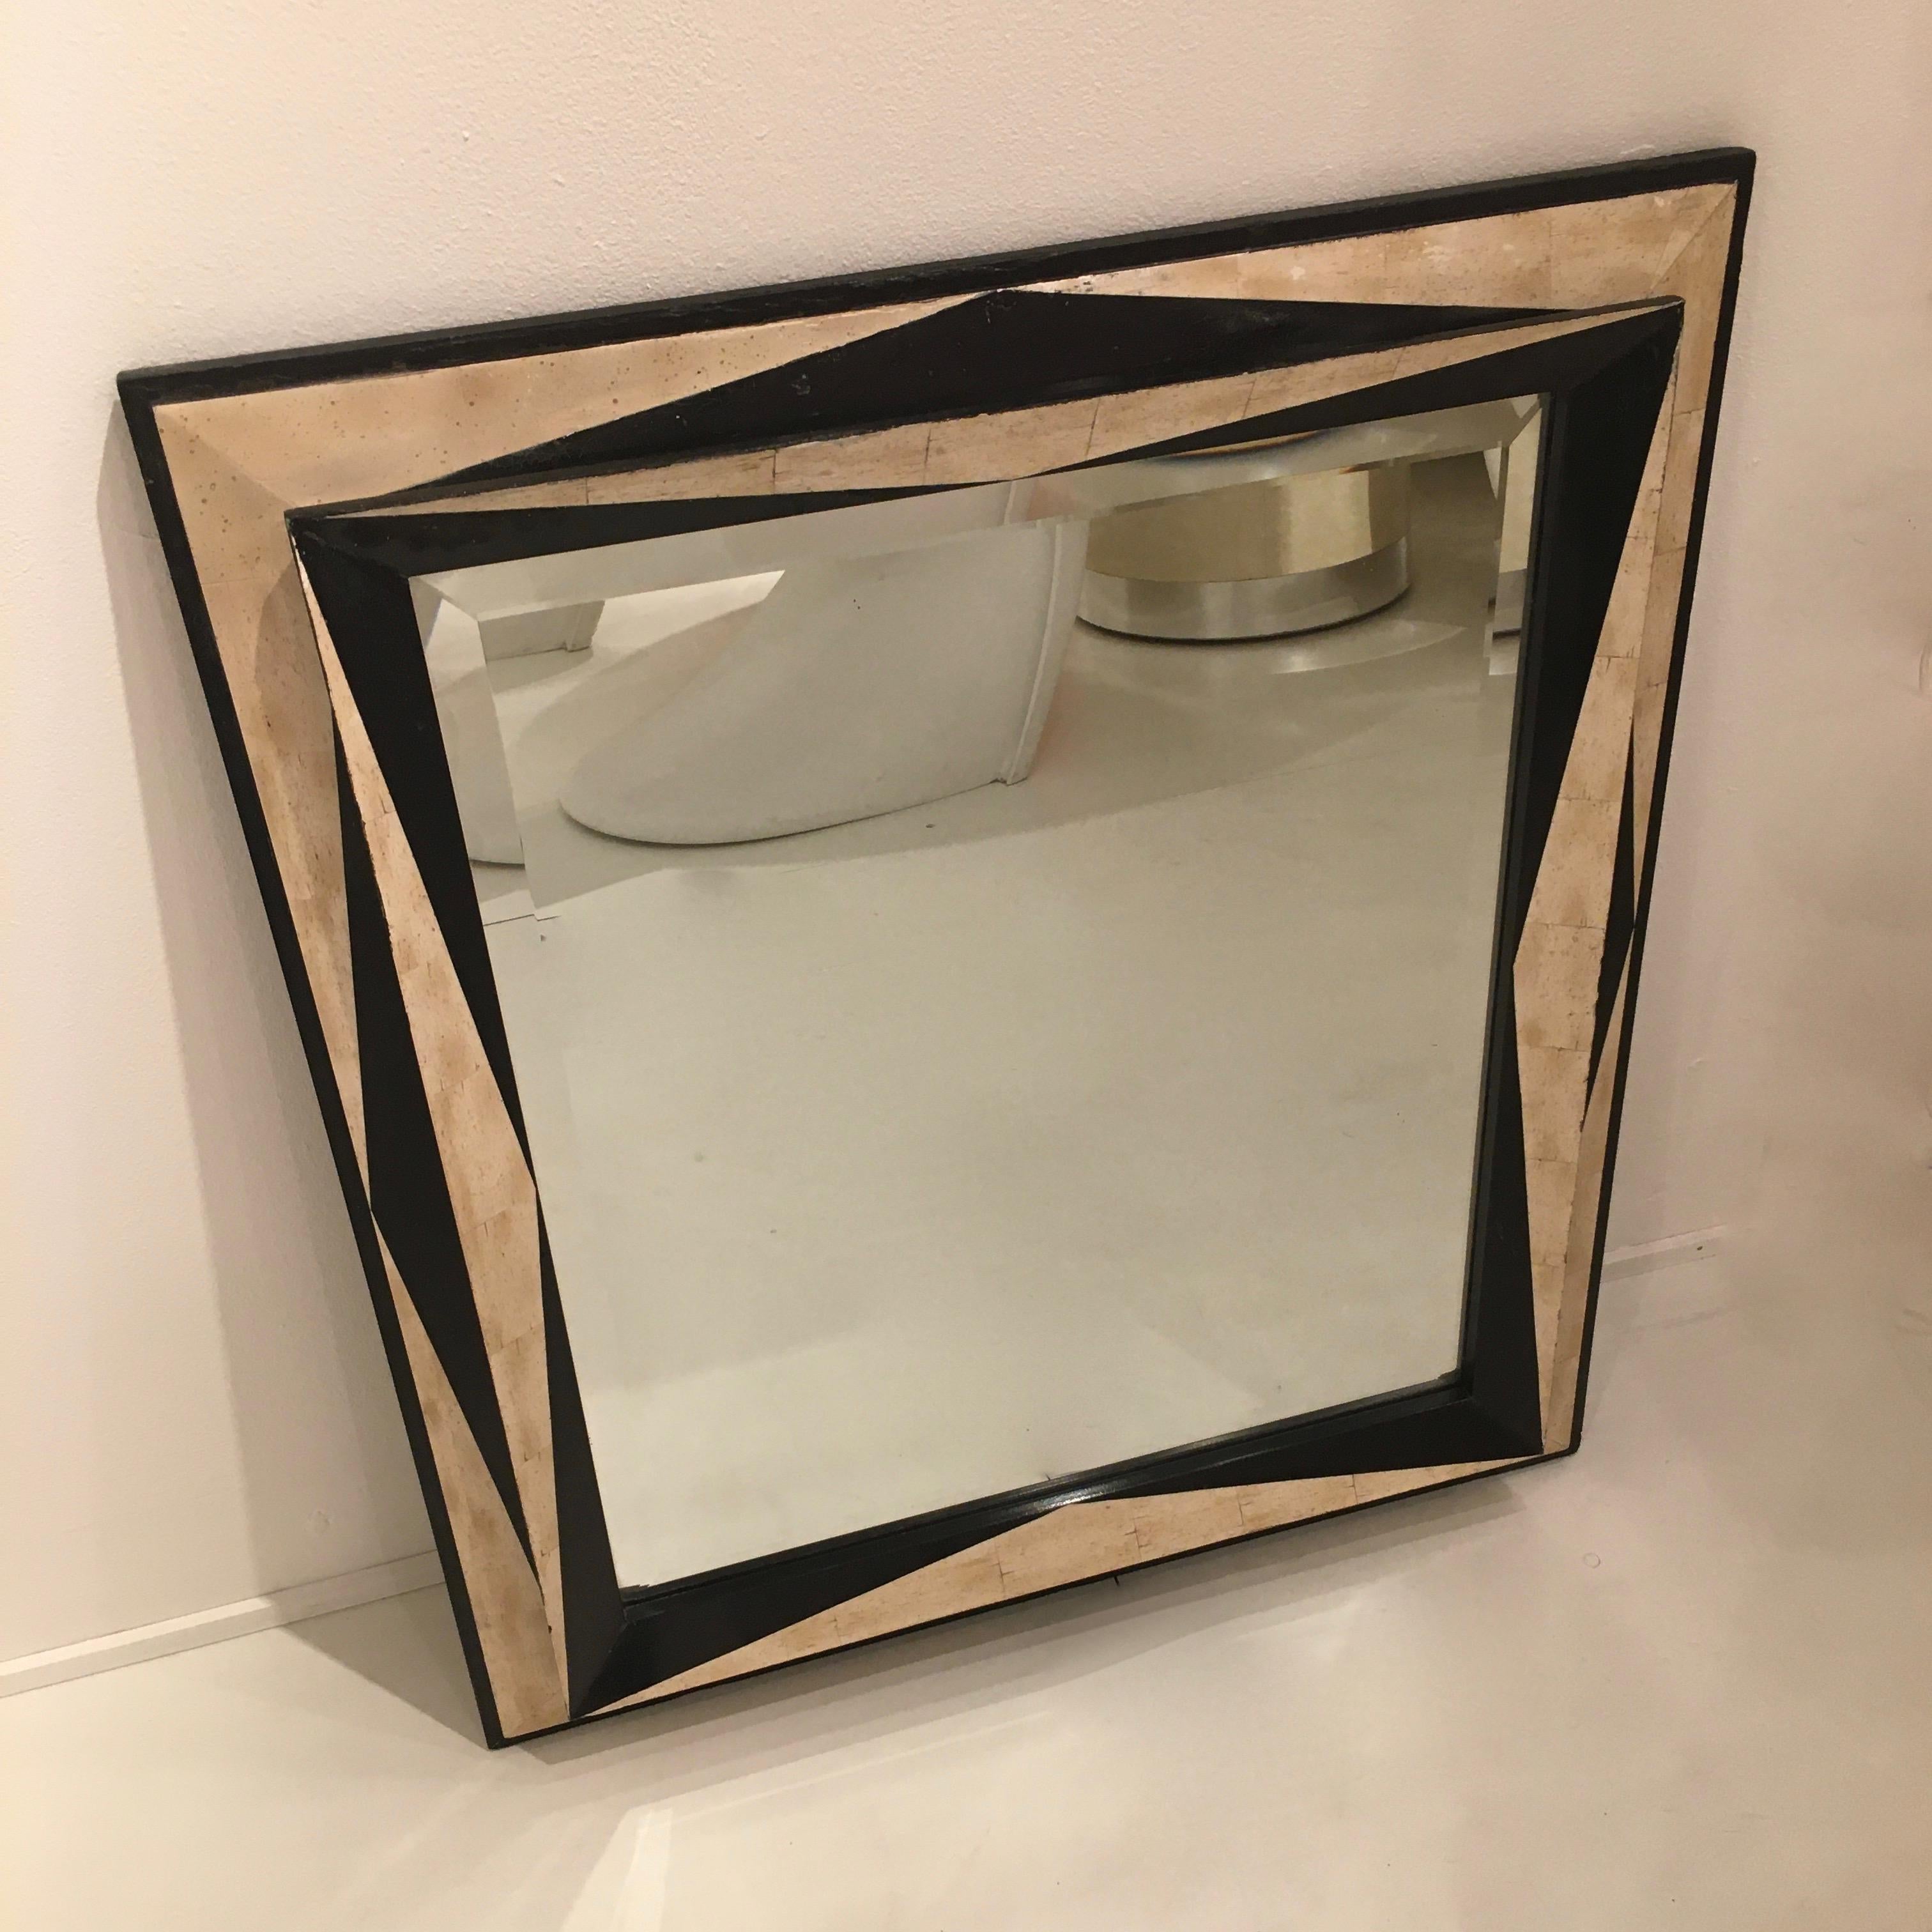 Unusual beveled mirror with a asymmetrical painted wood frame.
Geometrics black forms and bone trompe l'oeil background.
Attributed to Emiel Veraneman, Belgium around 1975.